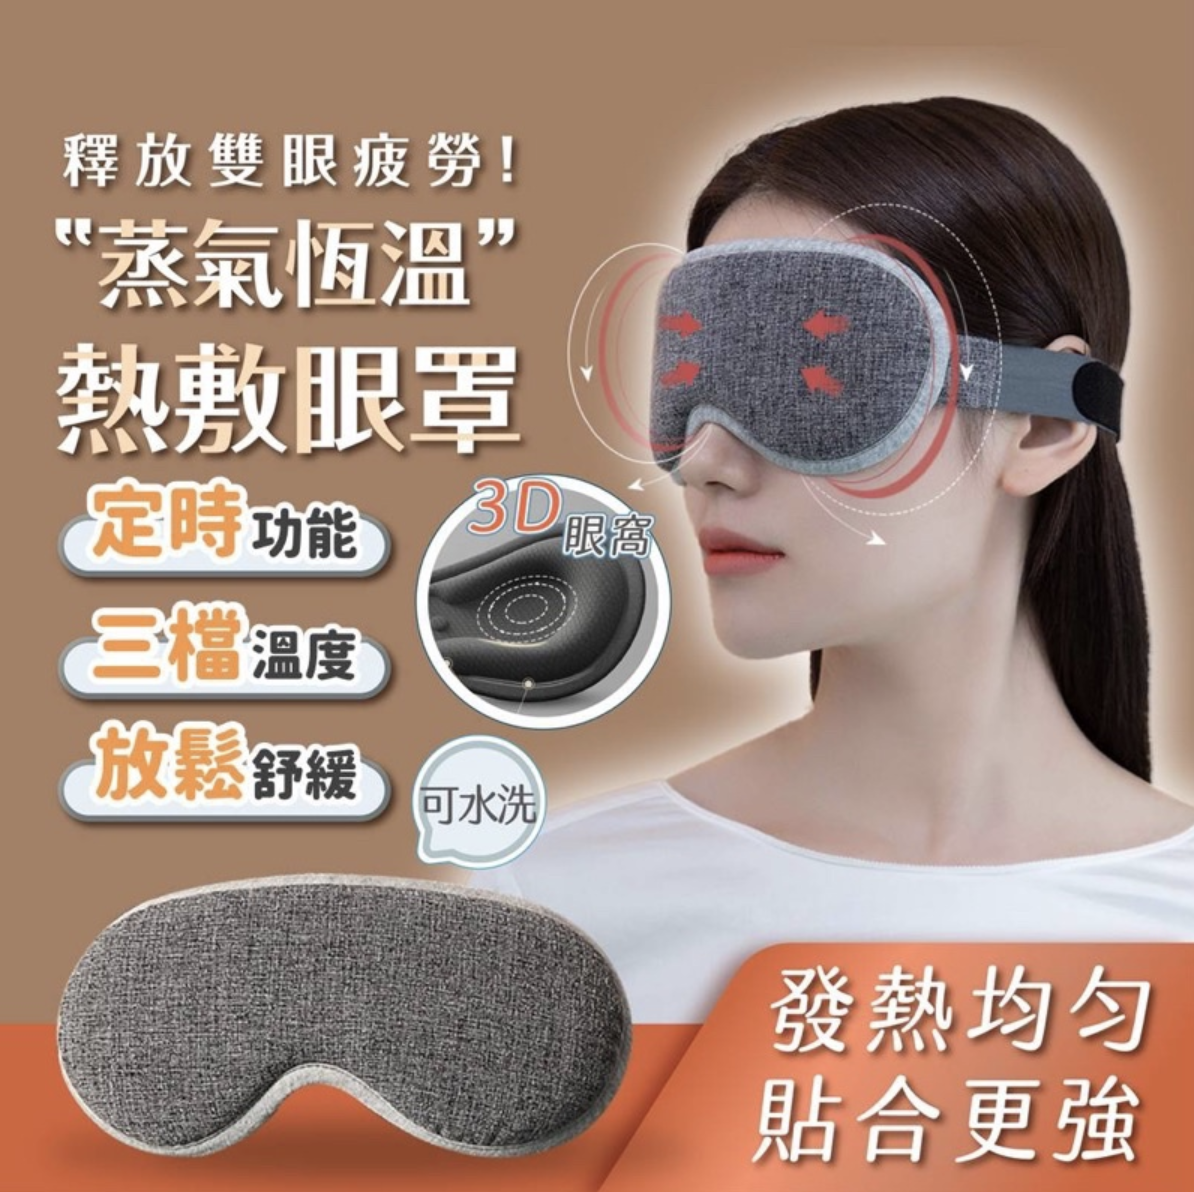 USB眼罩 舒壓按摩眼罩 蒸氣眼罩 蒸汽眼罩 熱敷眼罩 睡眠眼罩 眼睛熱敷 發熱眼罩 加熱眼罩 眼 倫敦灰